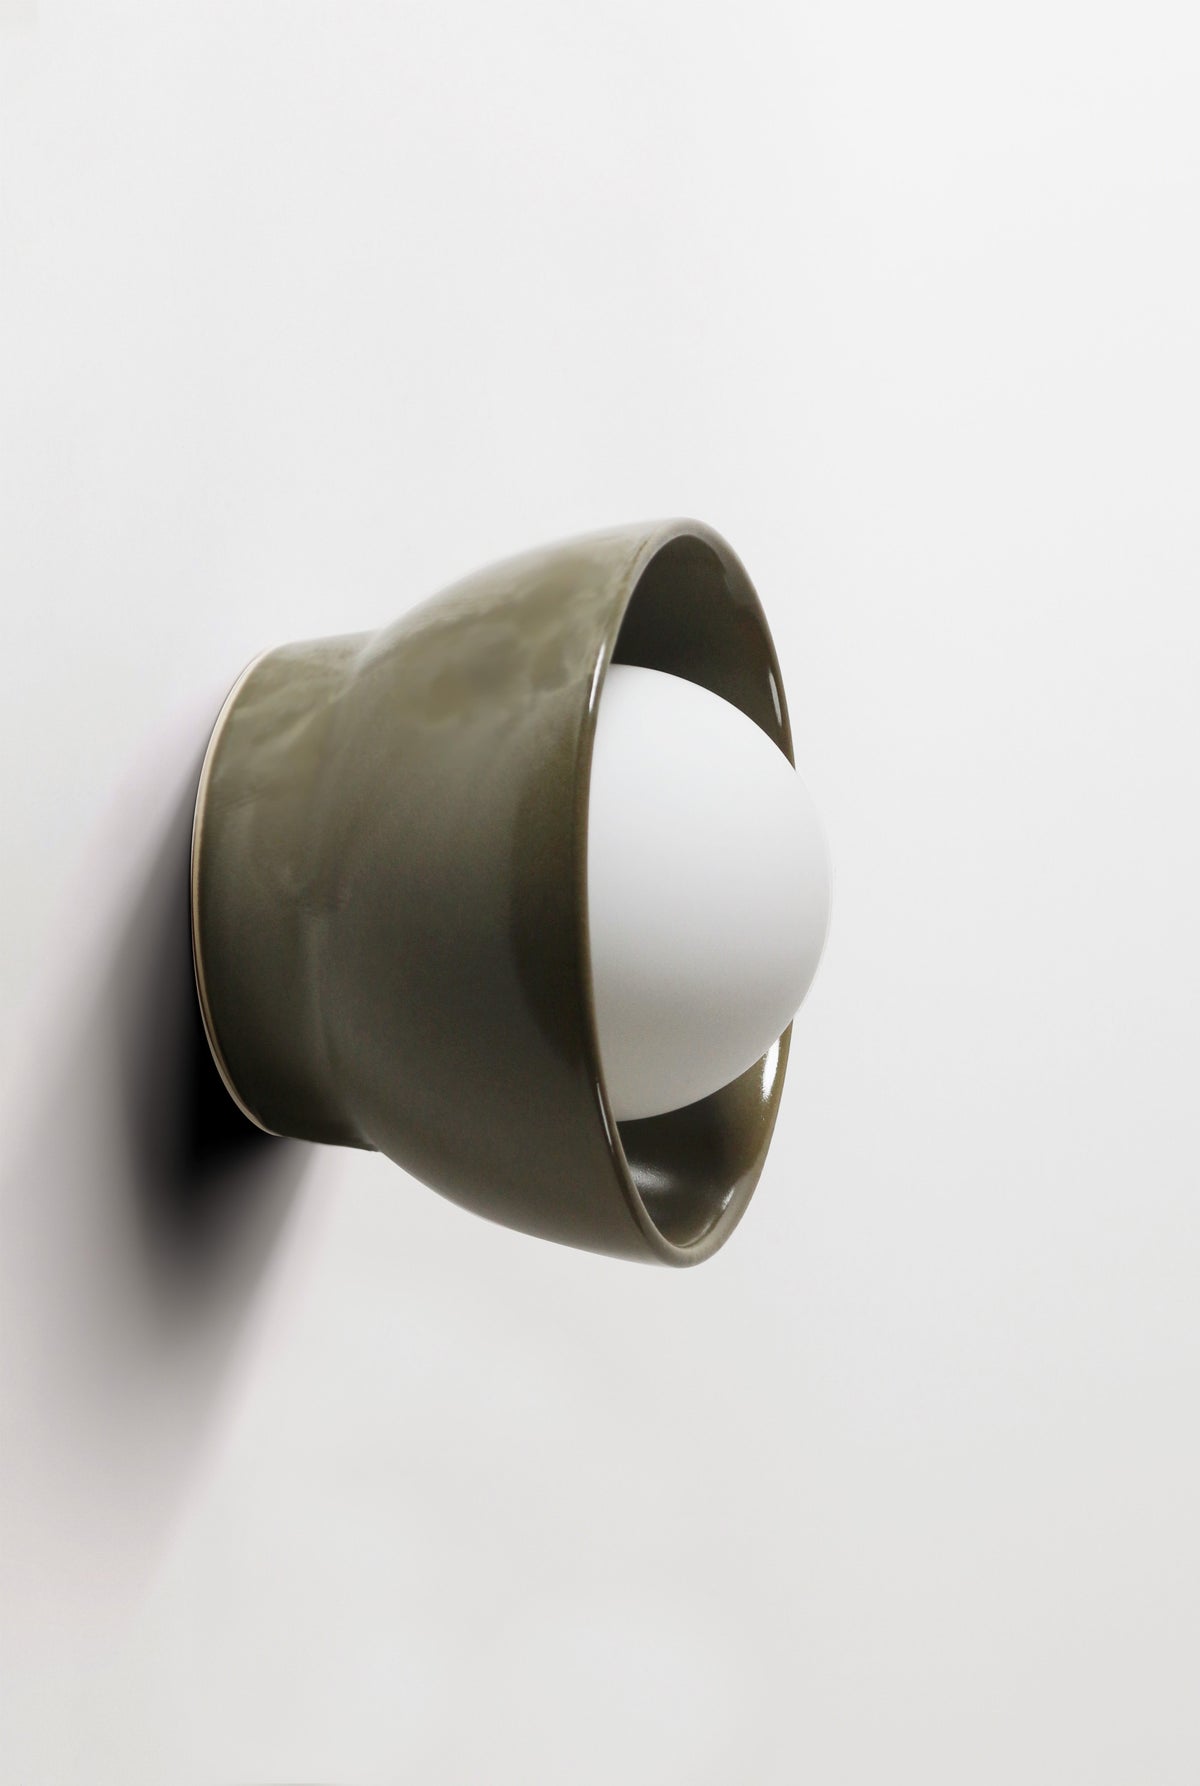 Ceramic Wall Bowl Sconce Light / Olive